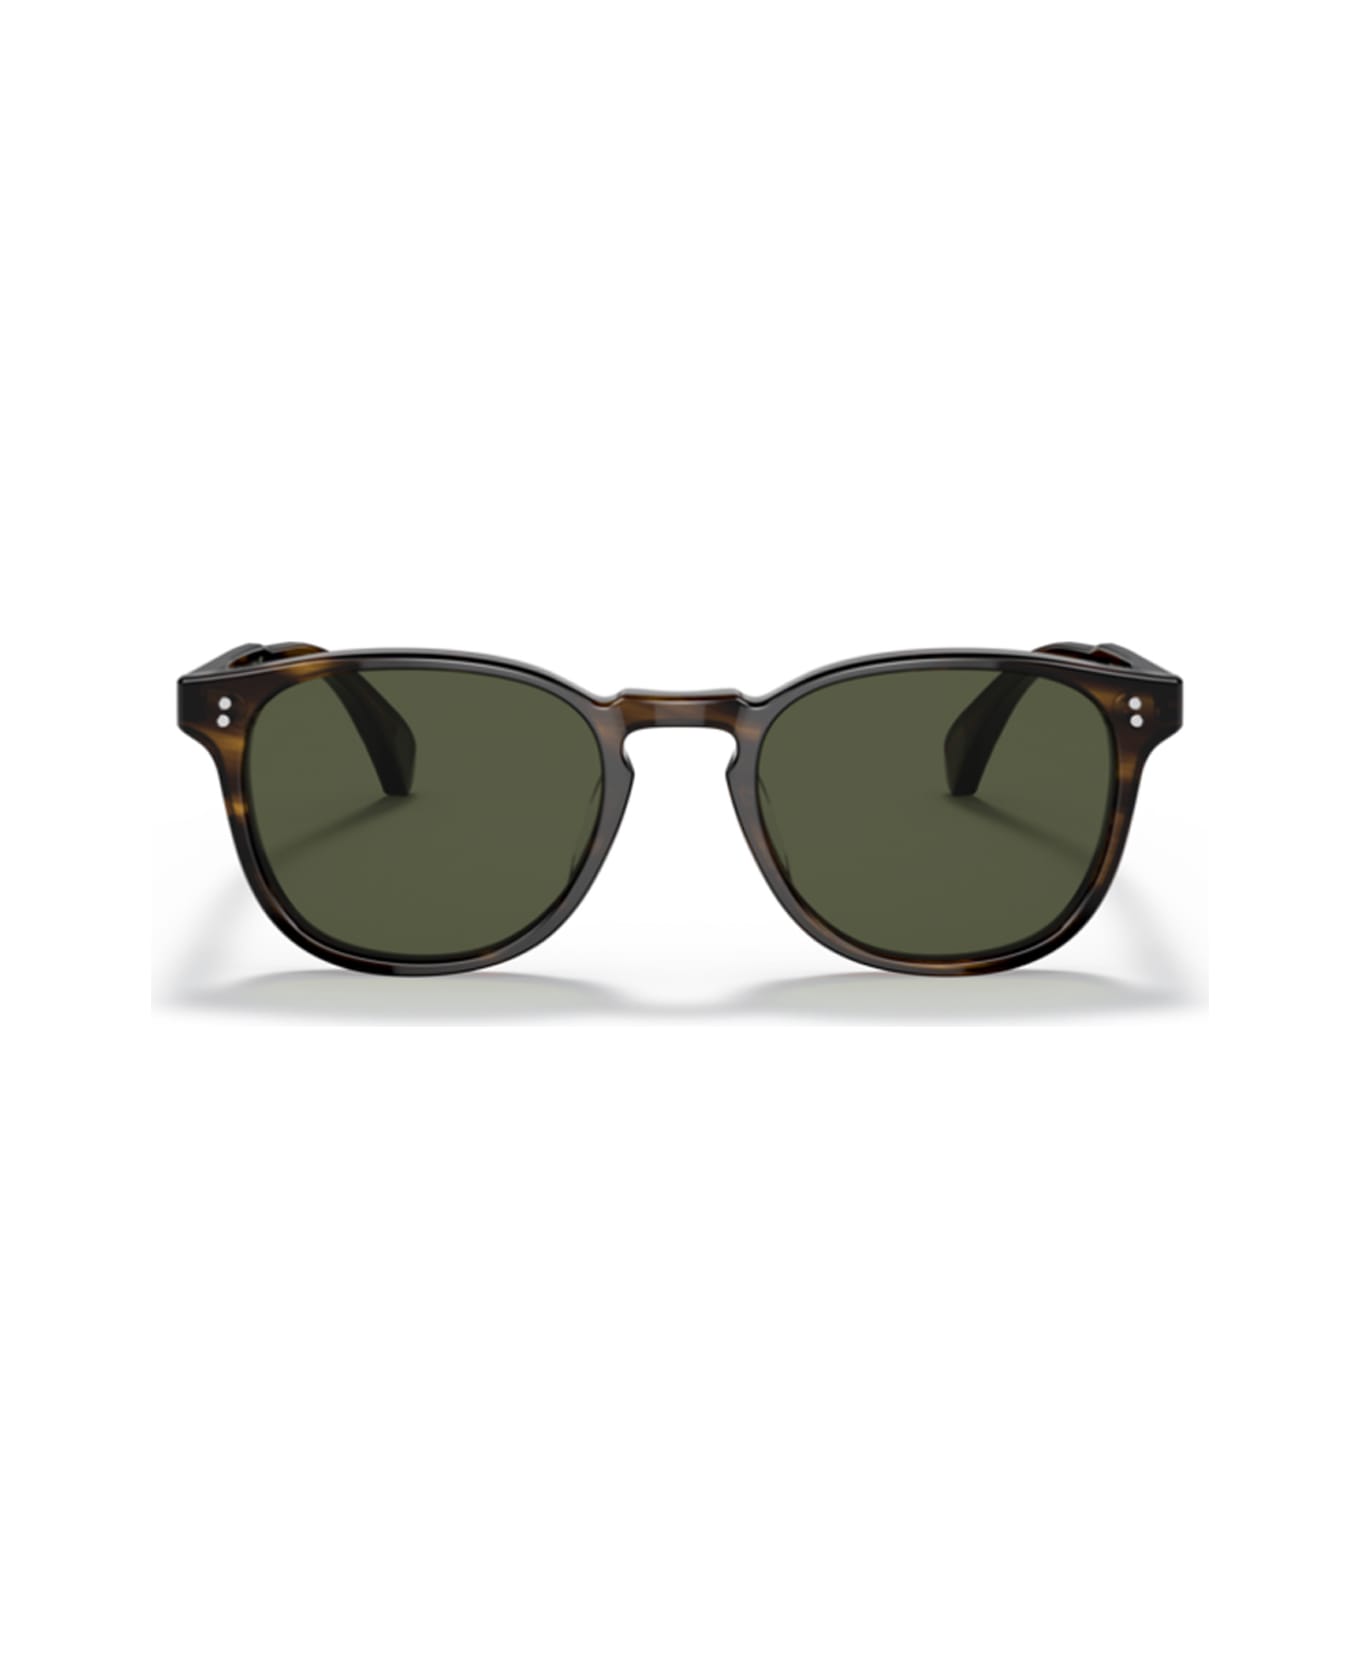 Oliver Peoples Ov5298o Sunglasses - Marrone サングラス